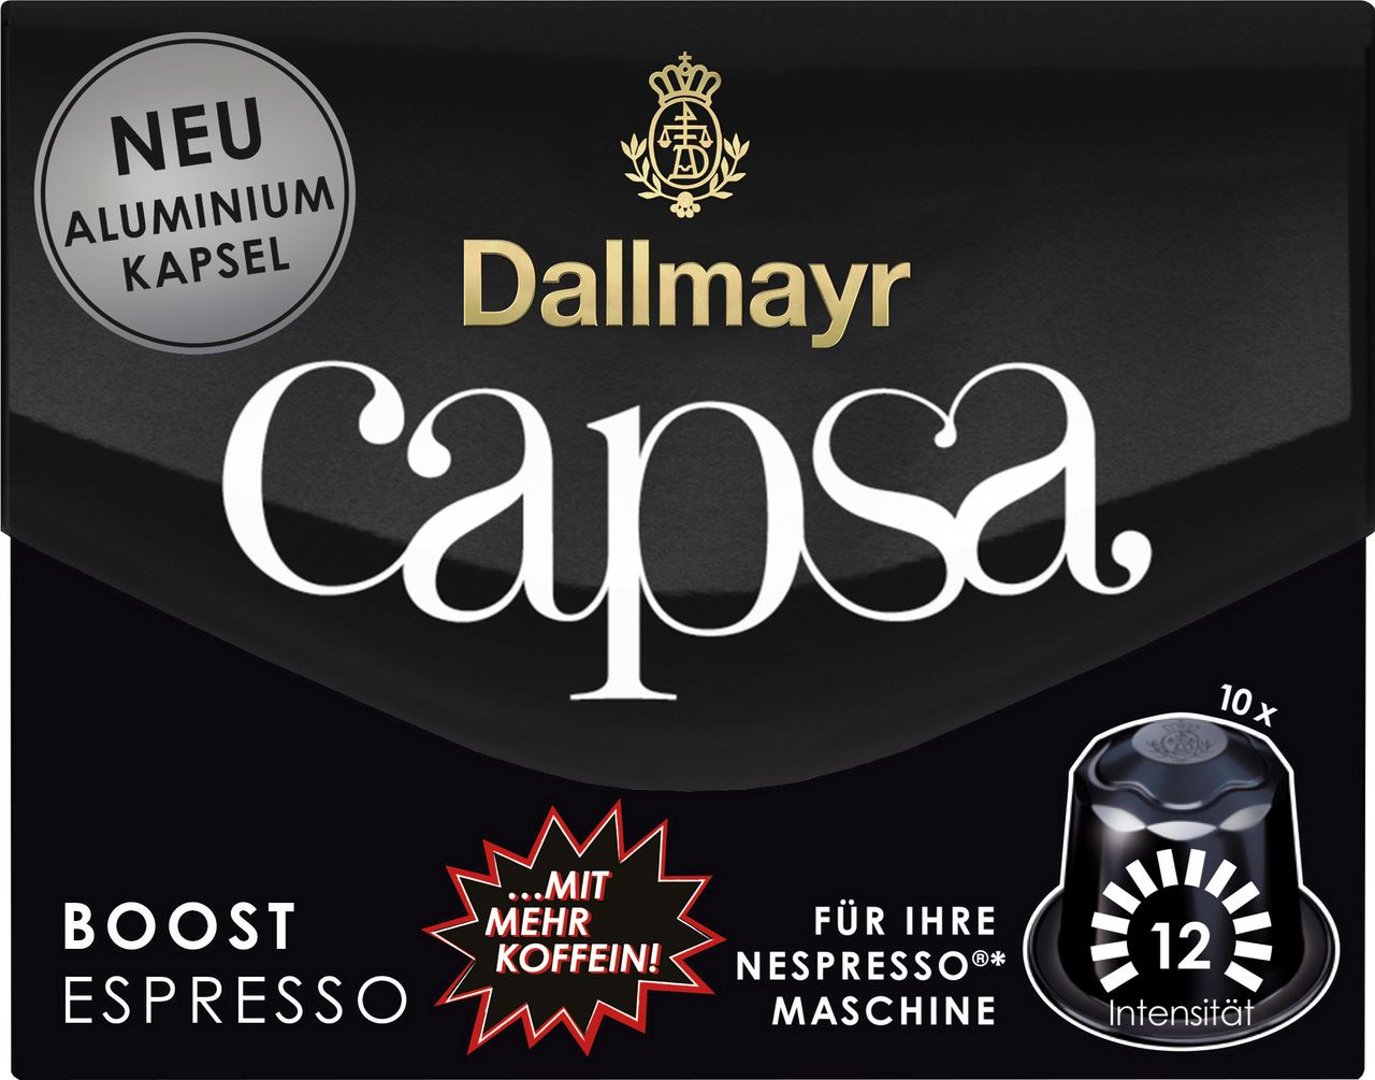 Dallmayr - Capsa Espresso Boost, 10 Kapseln - 56 g Paket